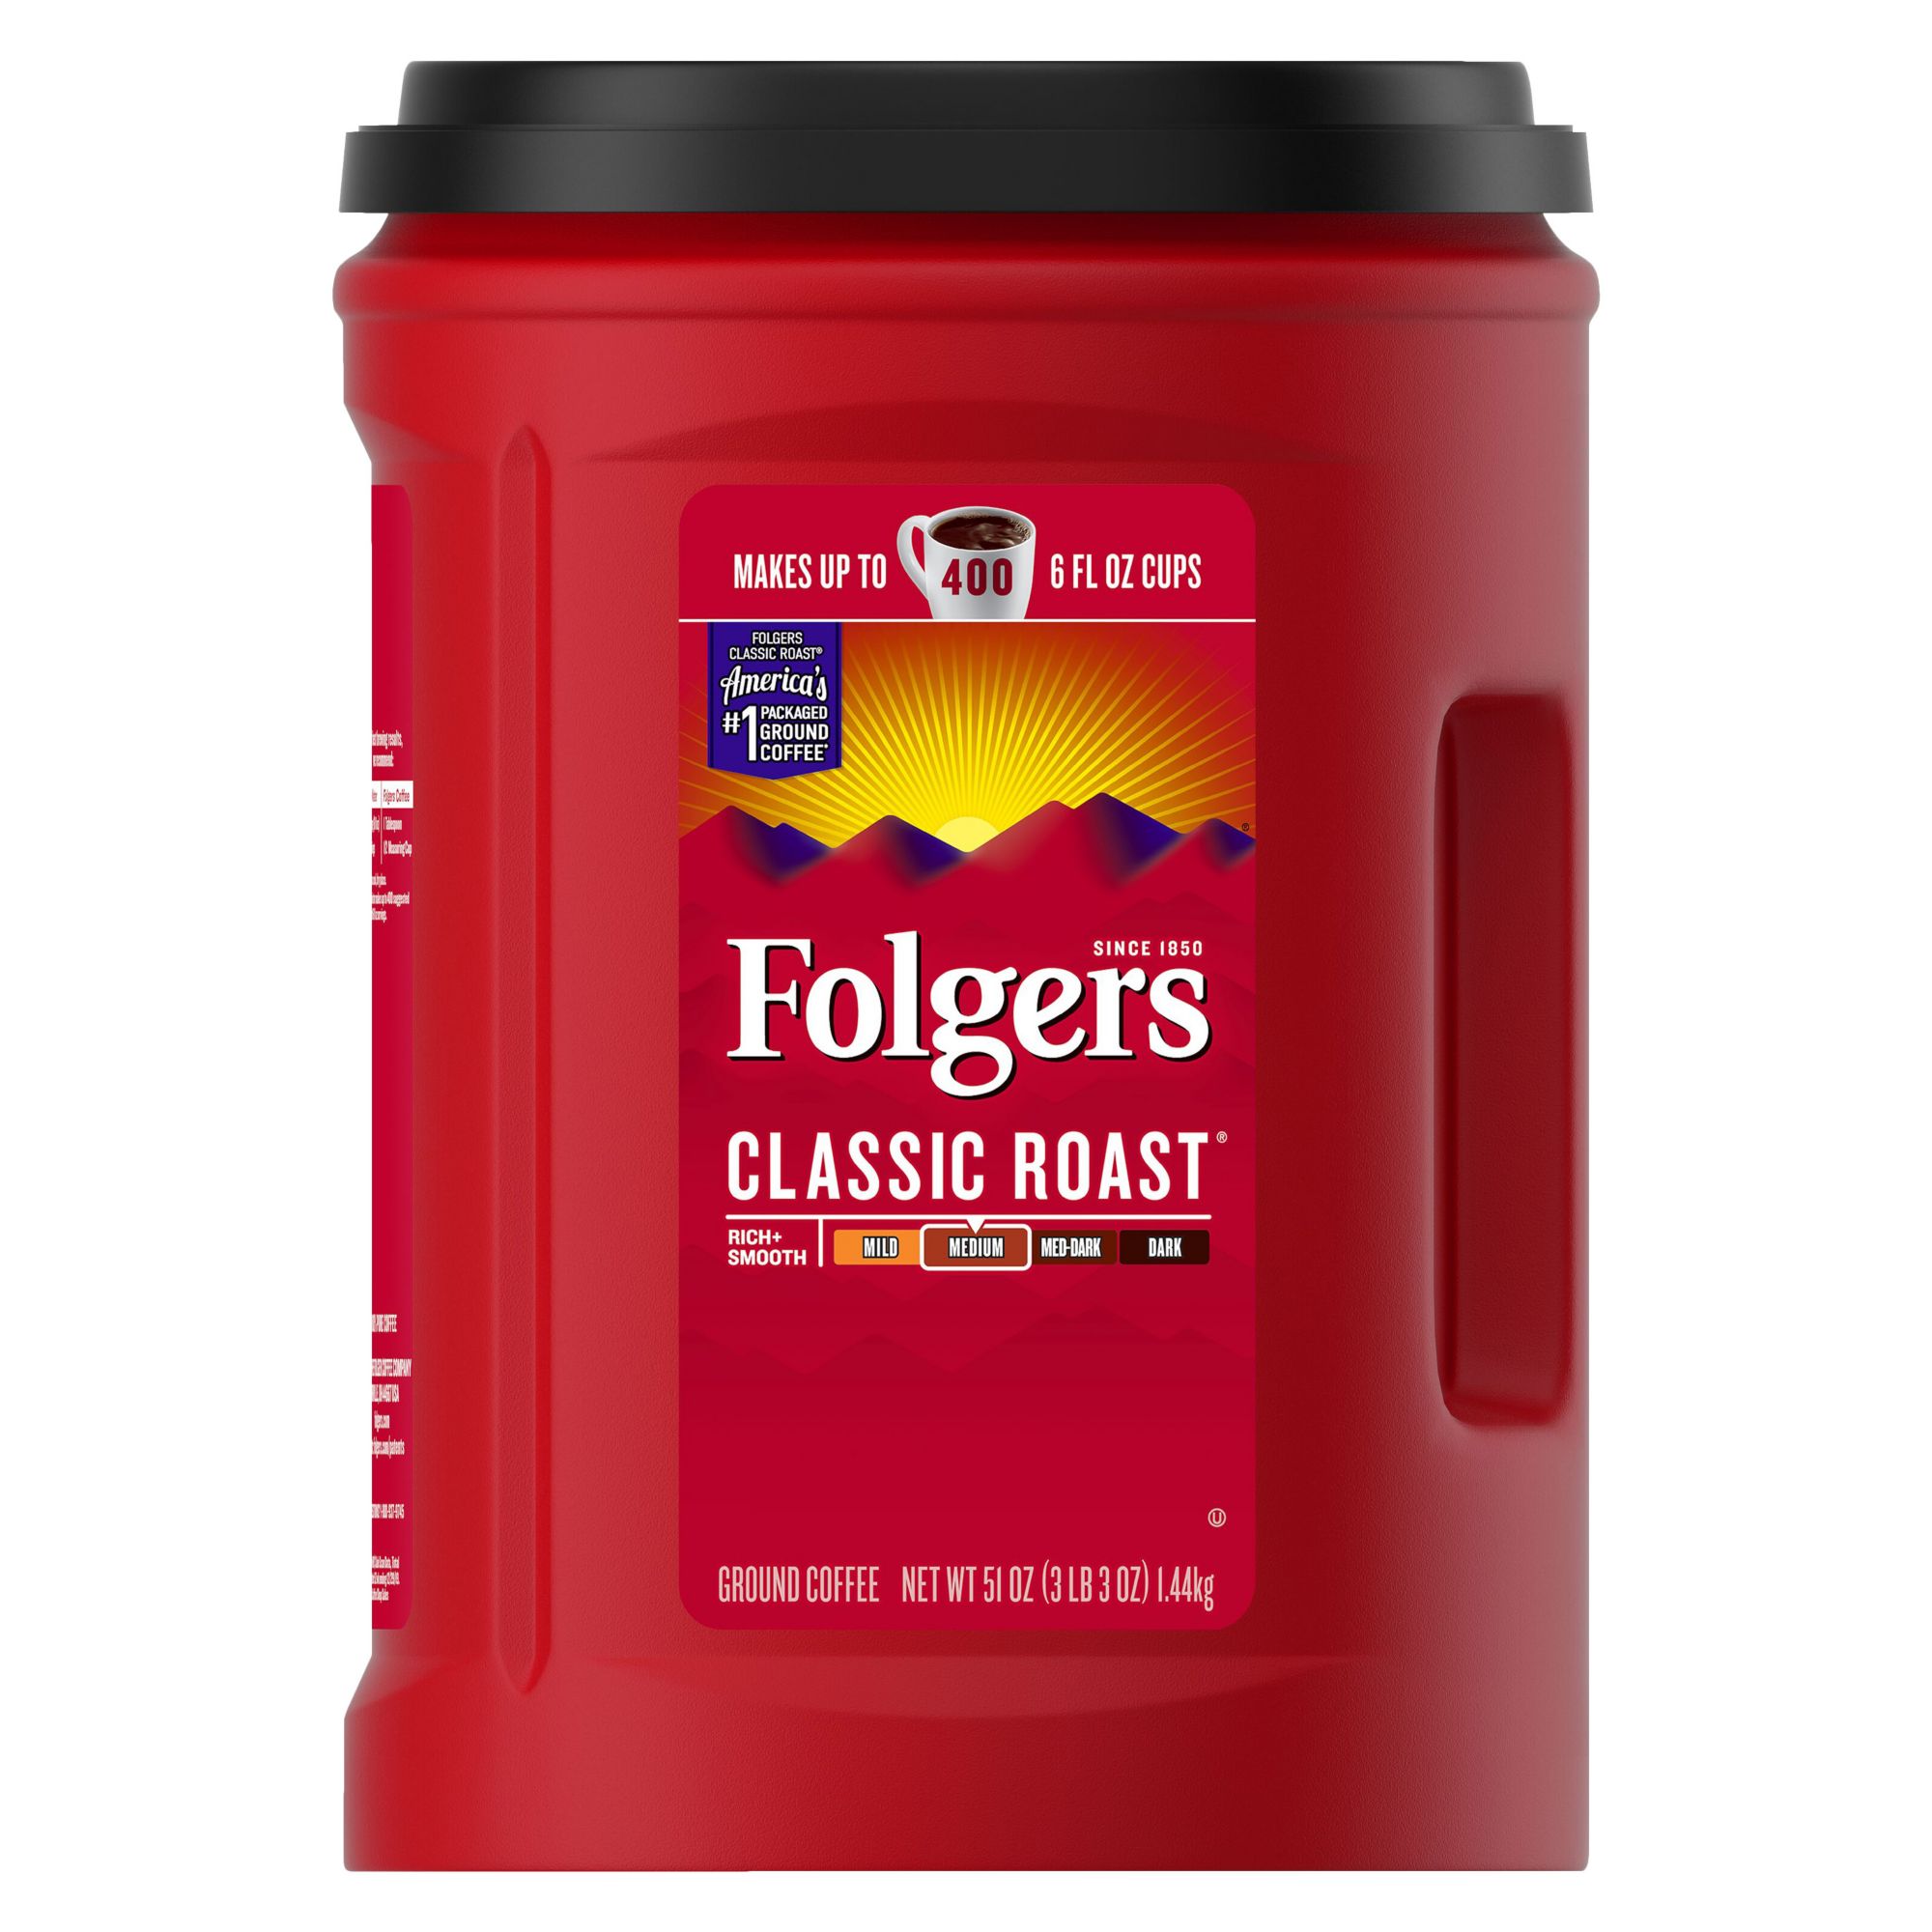 Folgers Classic Roast Coffee, 51 oz.